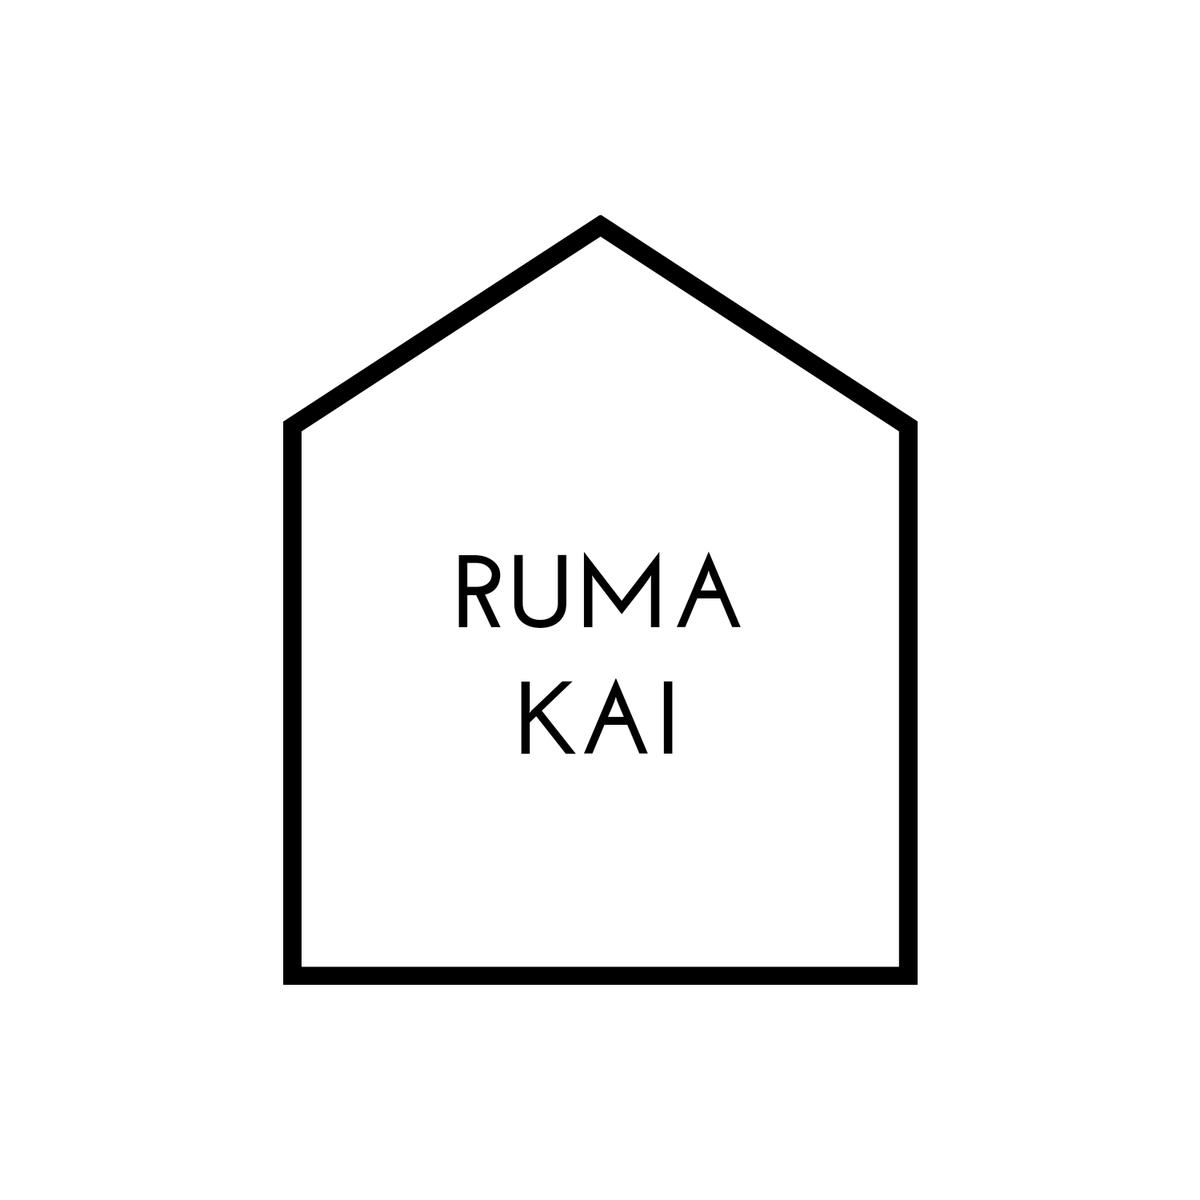 Gambar ruma_kai